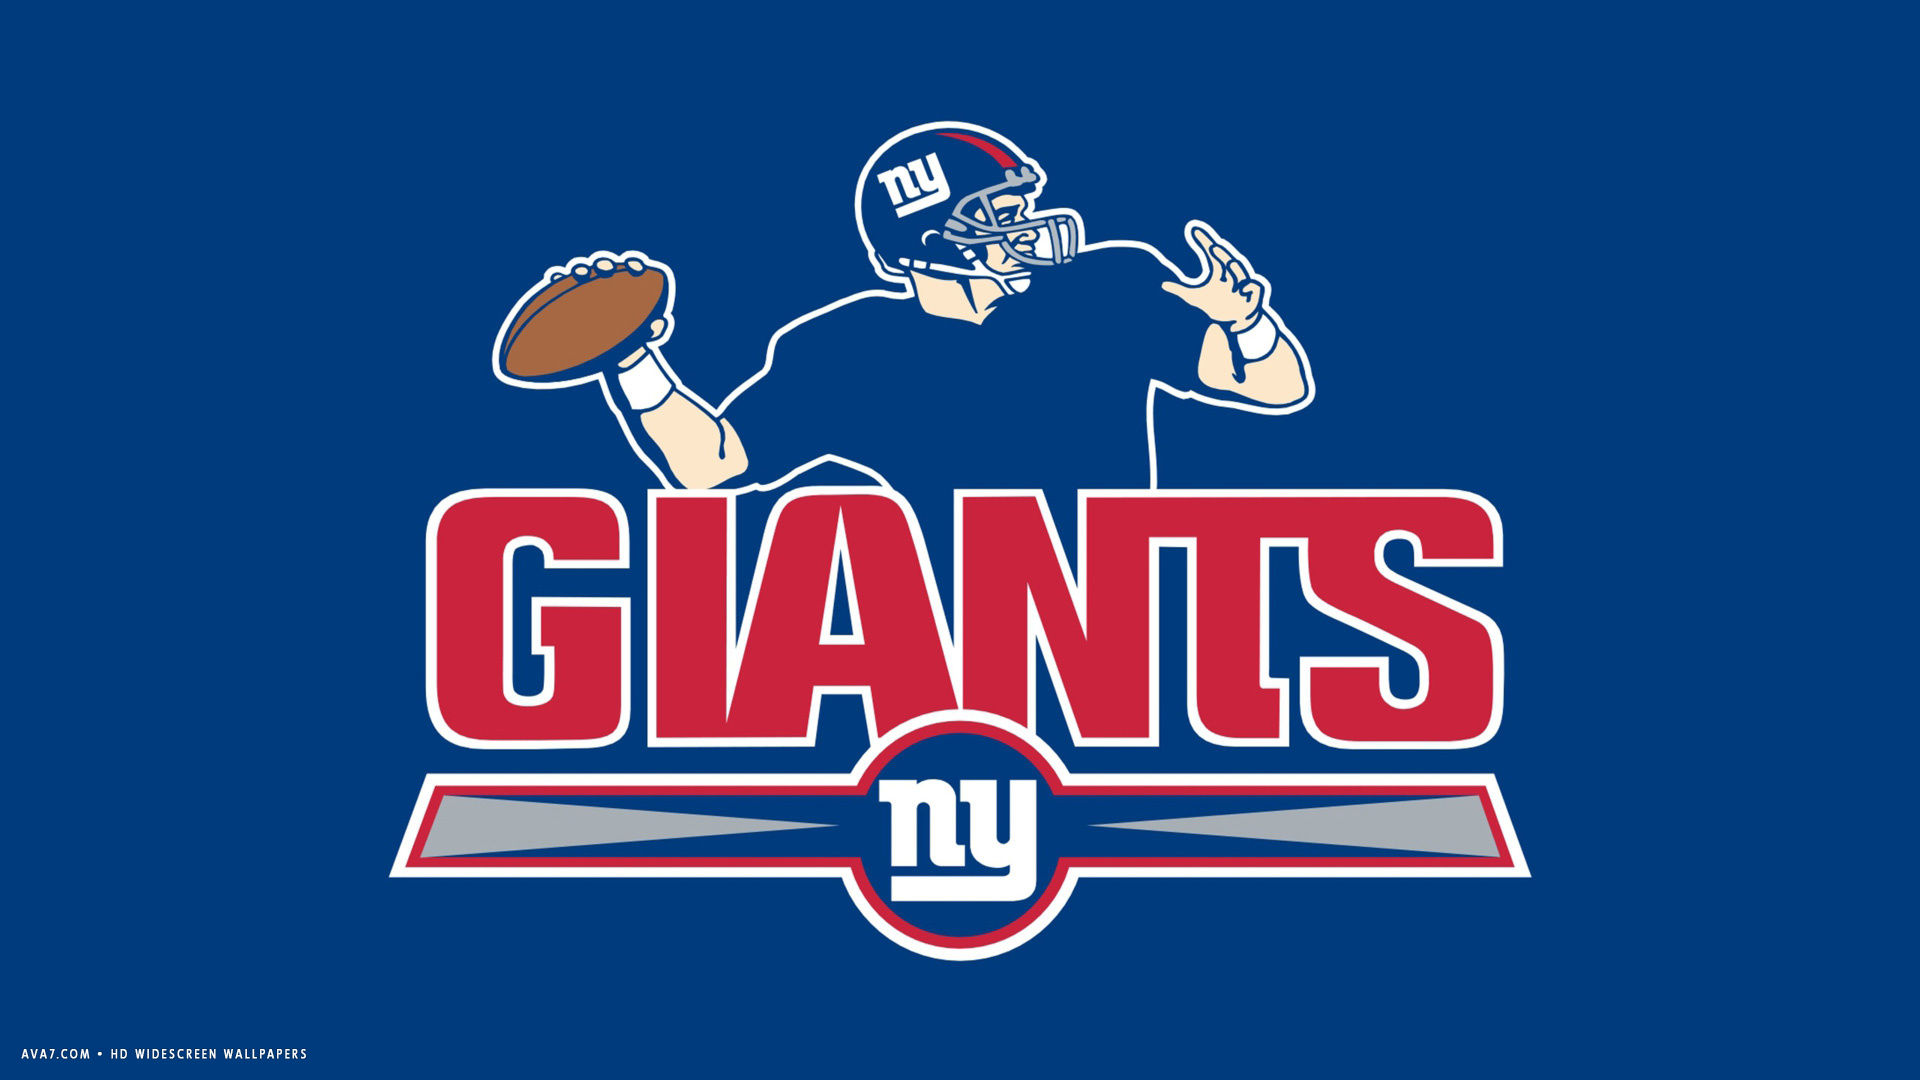 New York Giants Nfl Football Team Hd Widescreen Wallpaper - American Football New York Giants - HD Wallpaper 